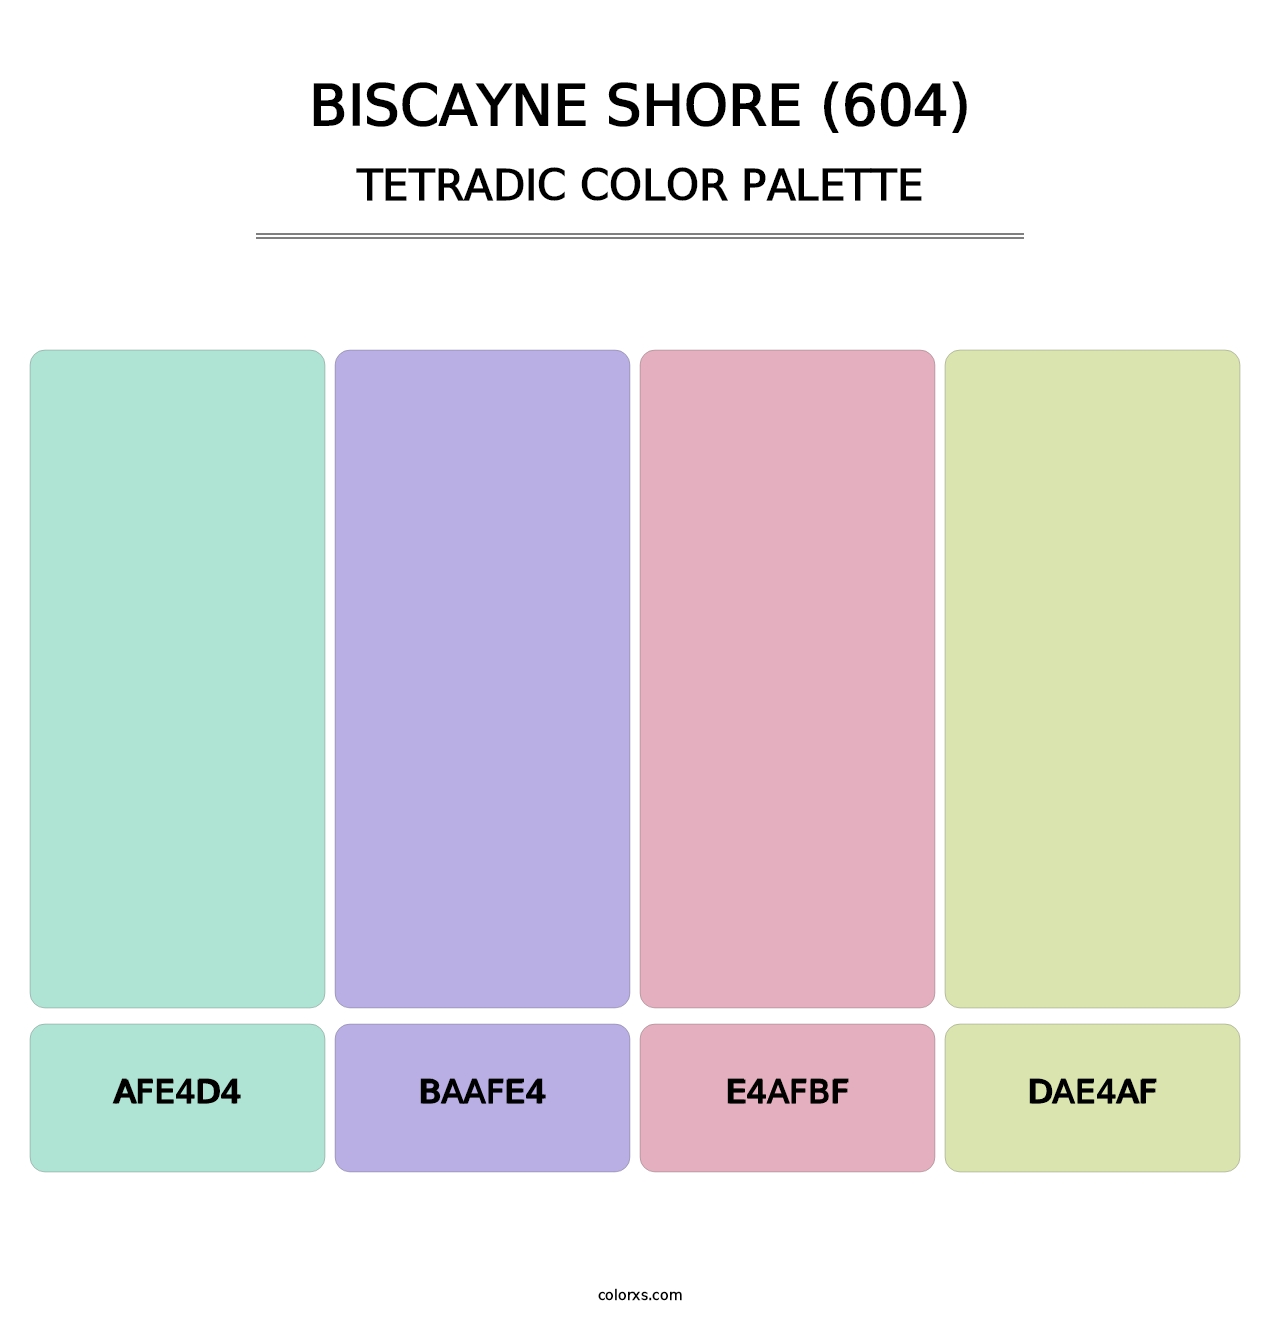 Biscayne Shore (604) - Tetradic Color Palette